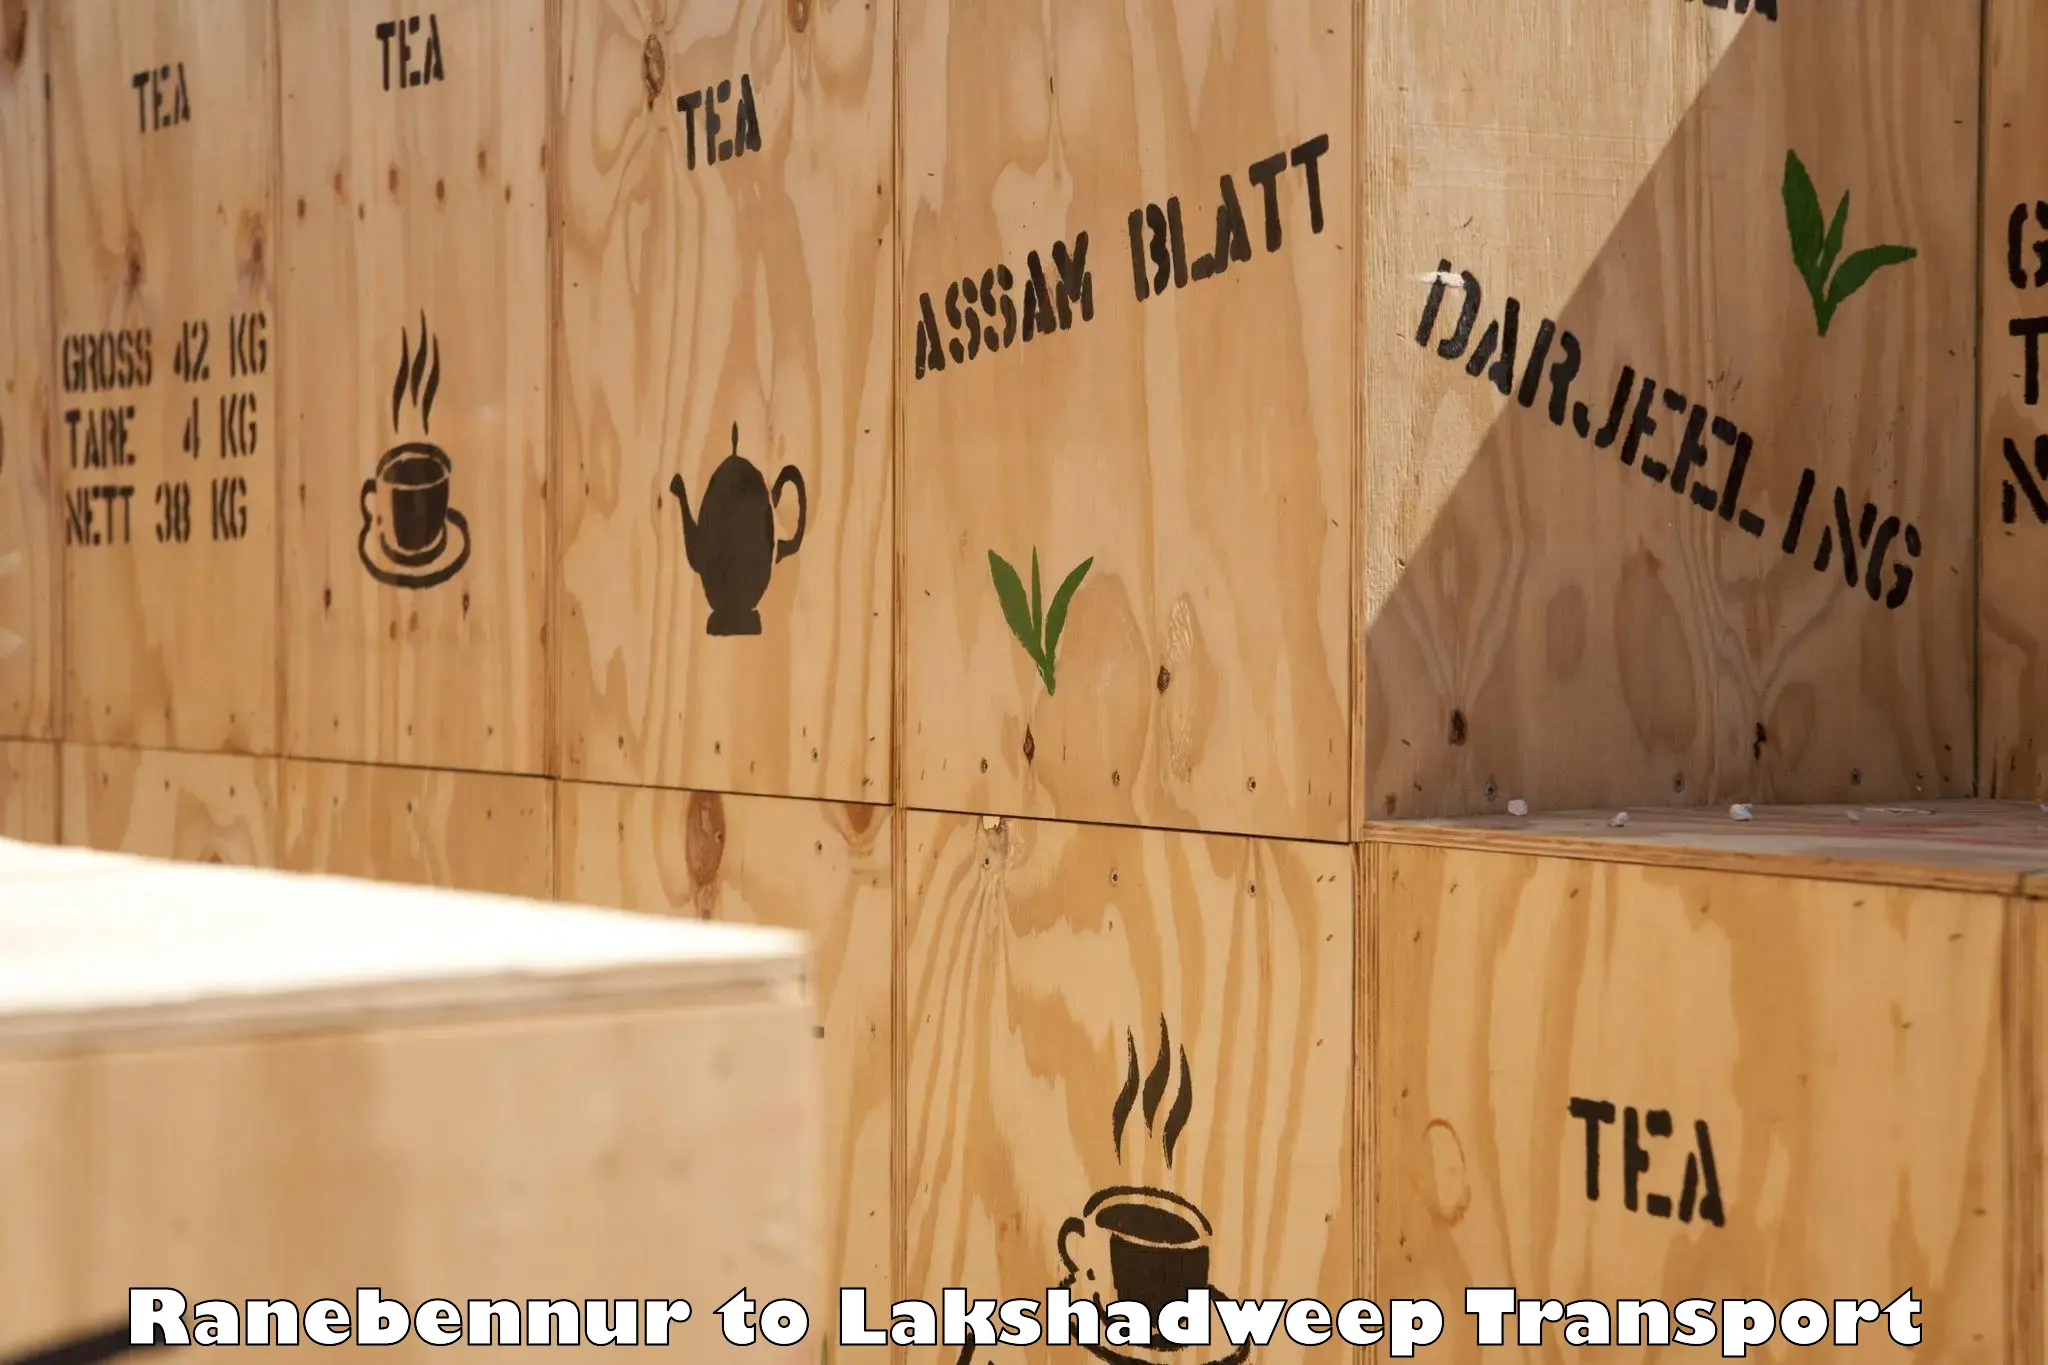 Shipping partner Ranebennur to Lakshadweep